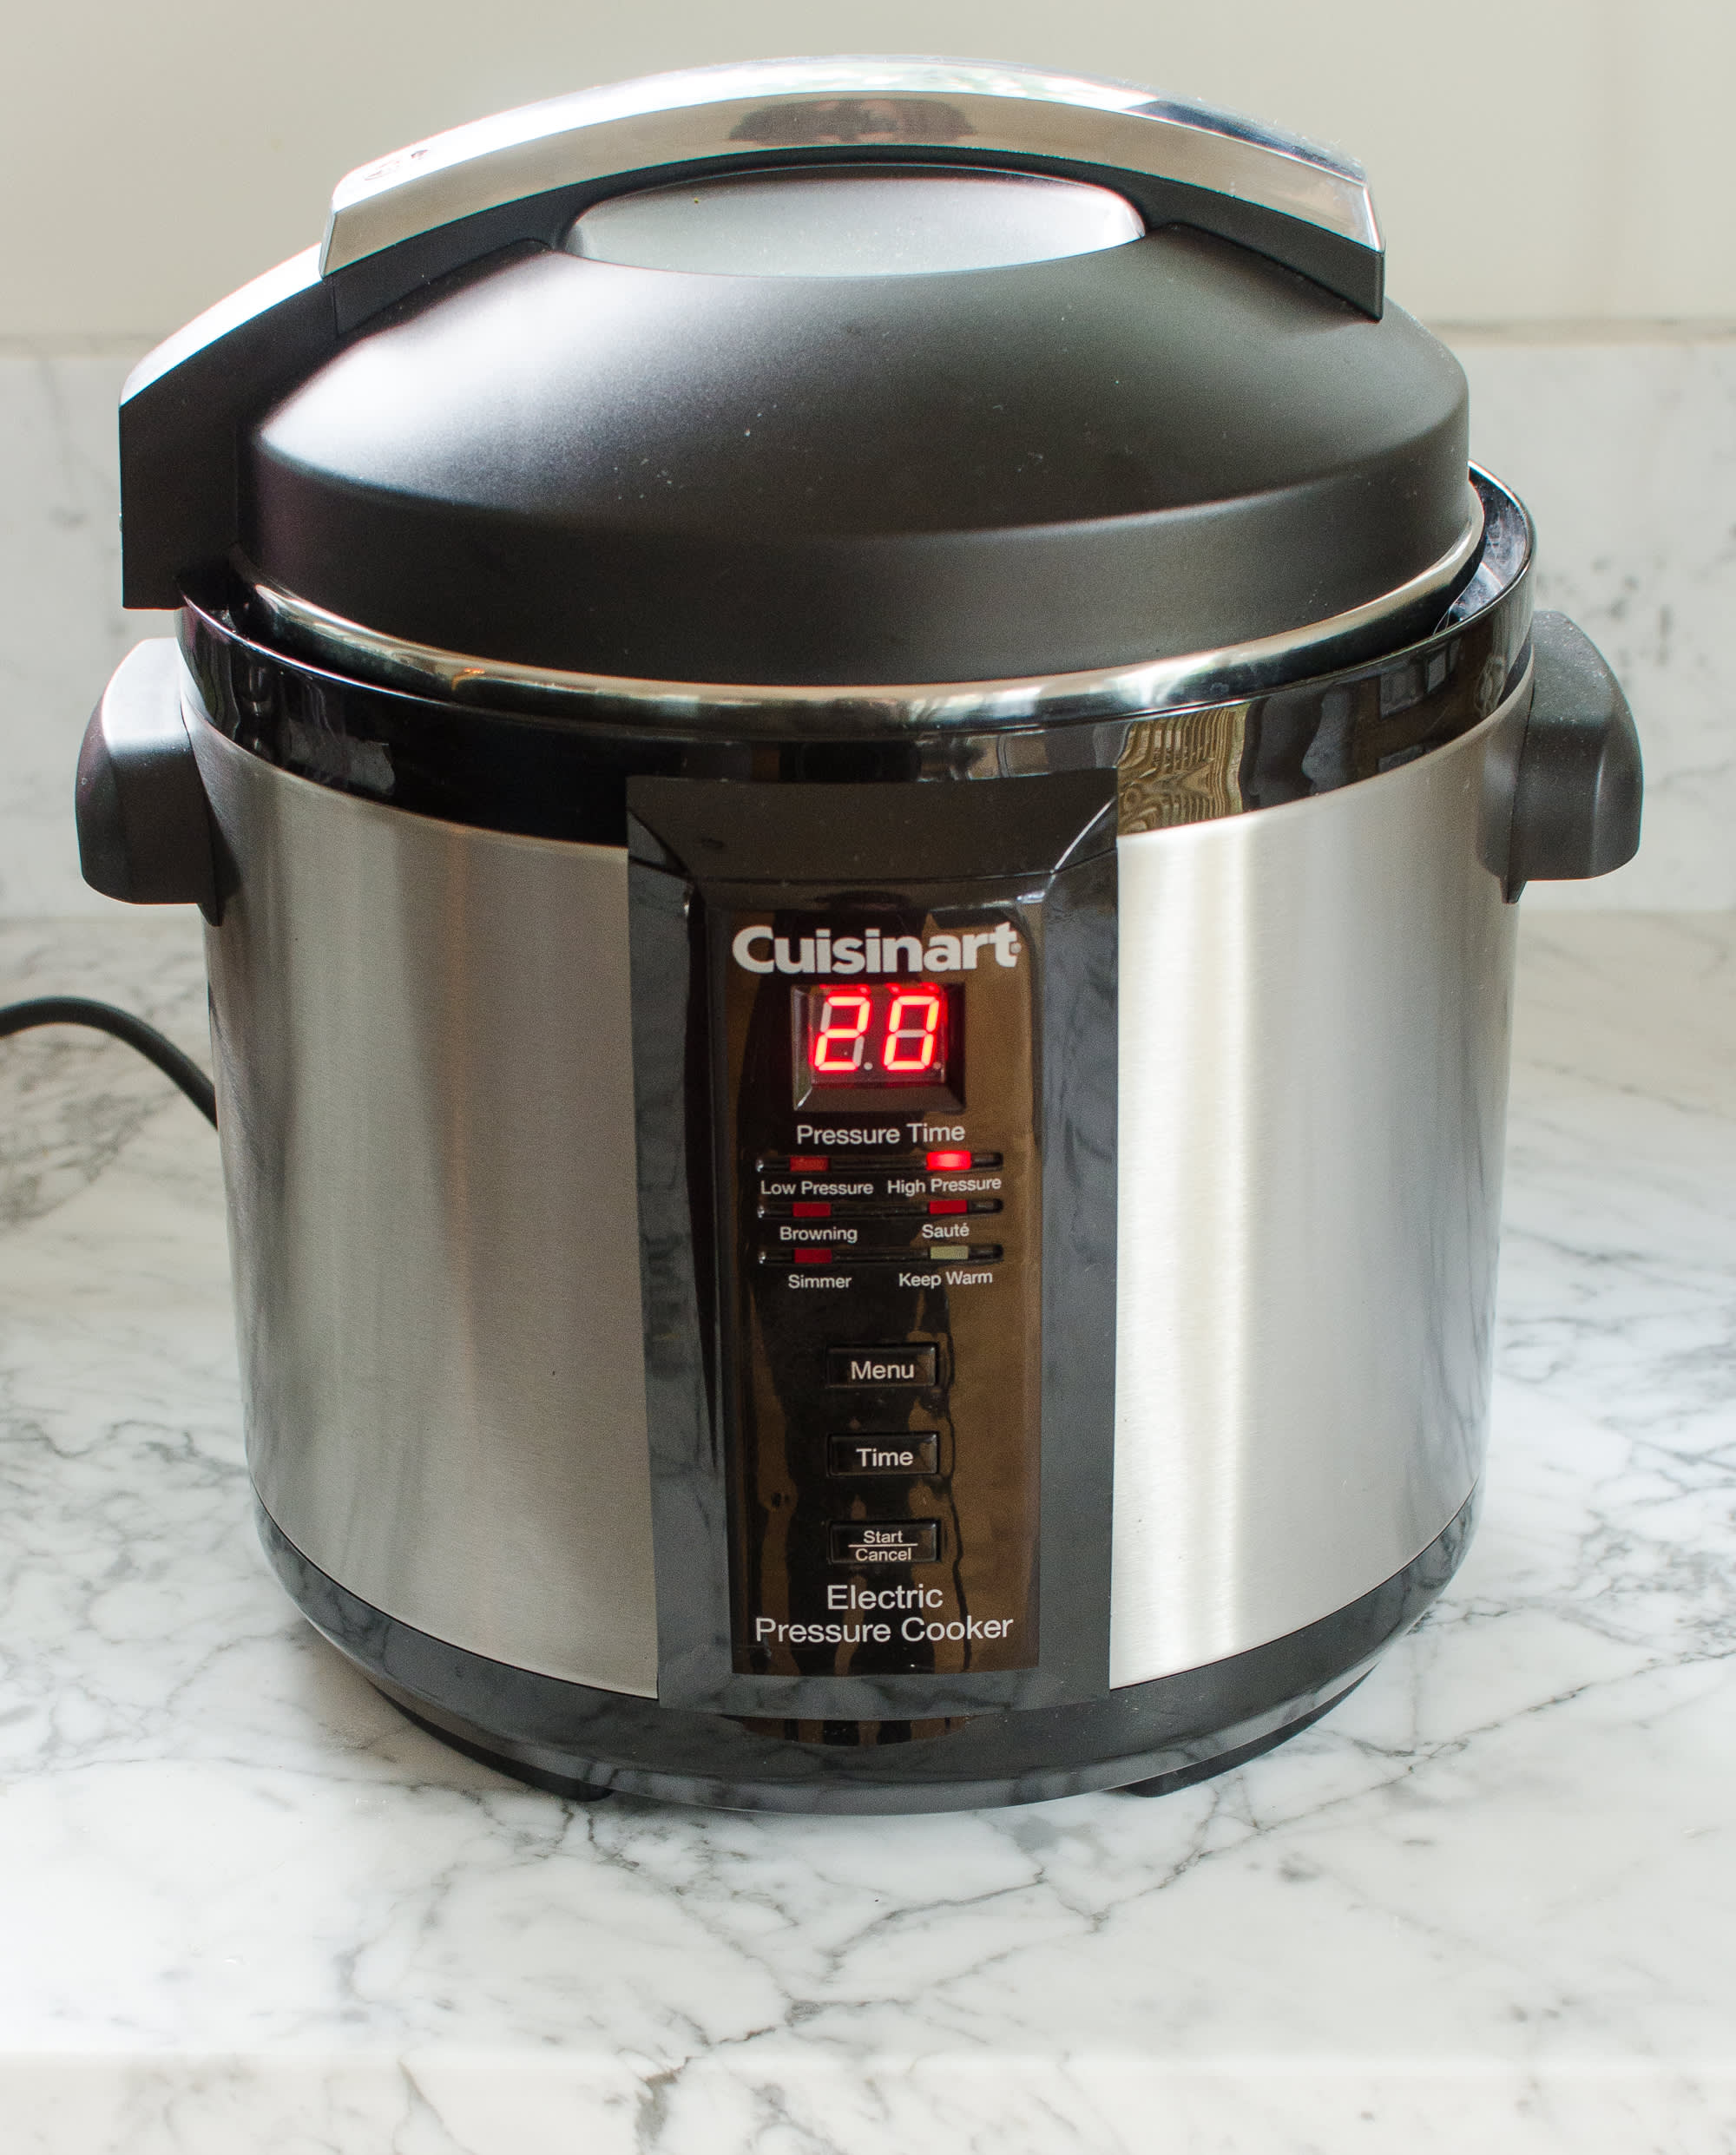 Cuisinart Electric Pressure Cooker Kitchn